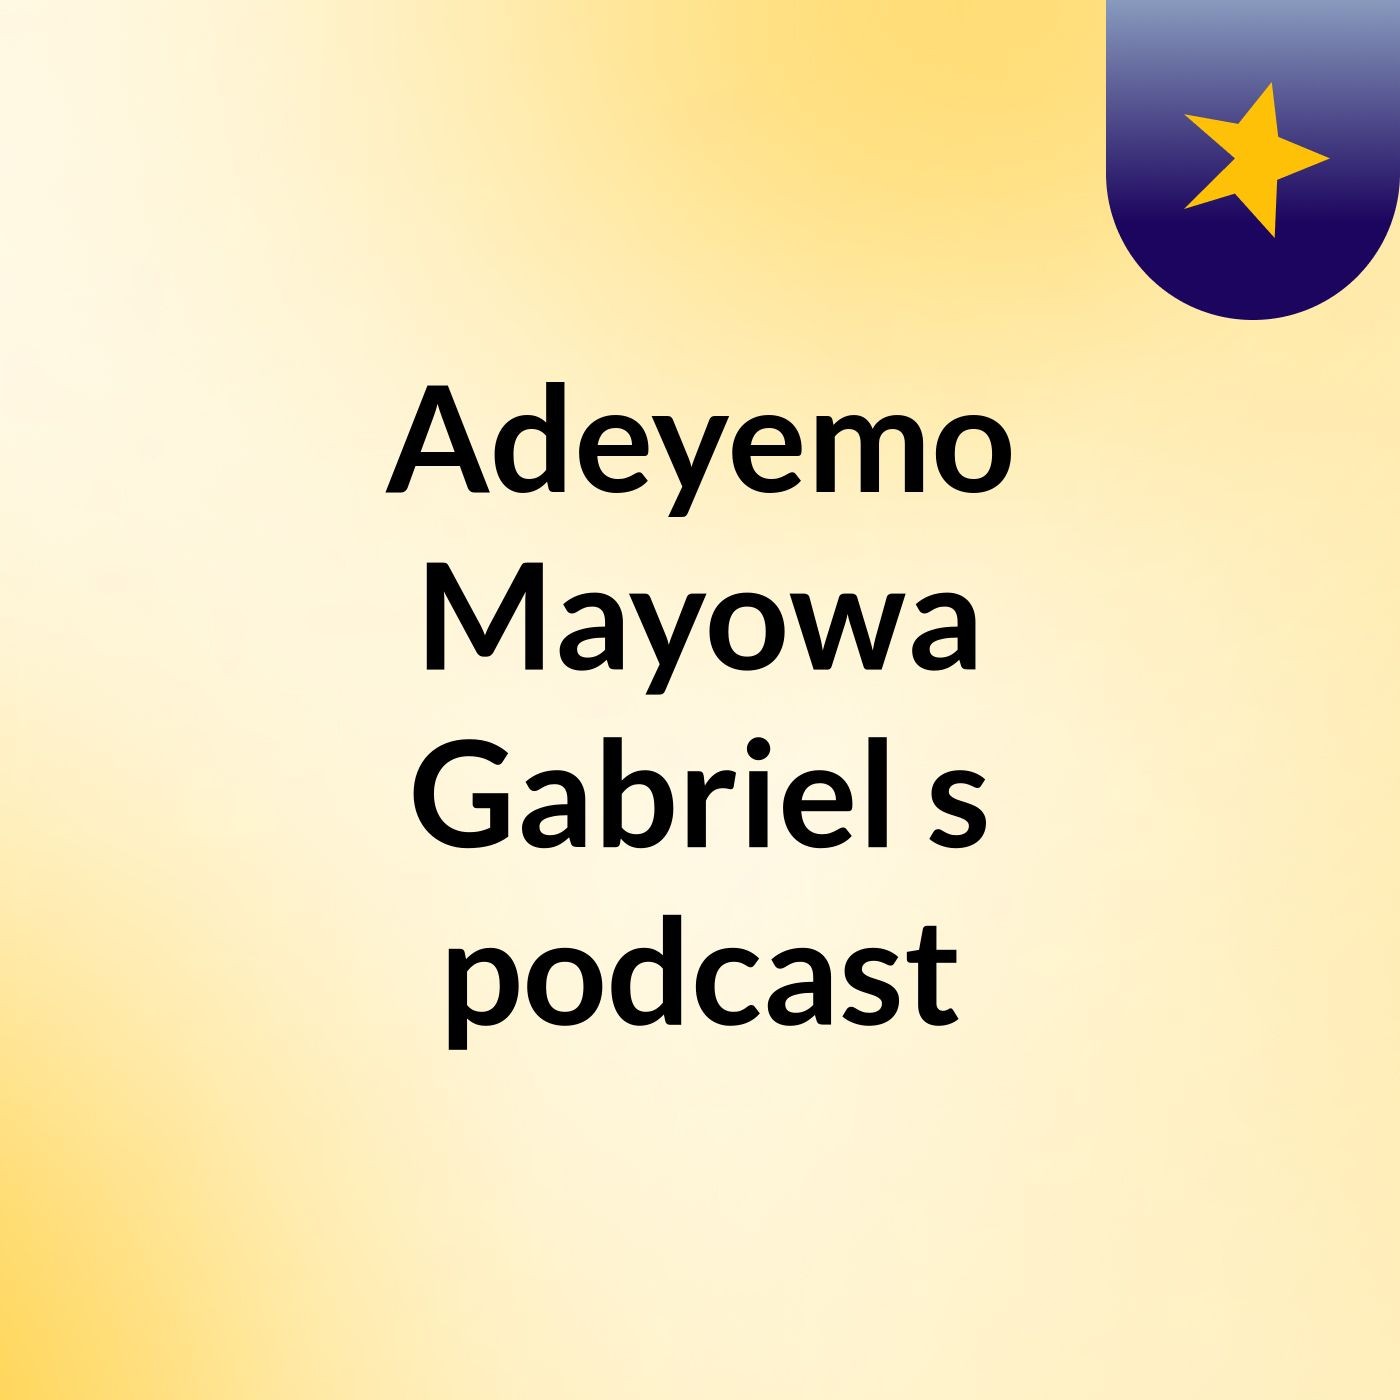 Episode 8 - Adeyemo Mayowa Gabriel's podcast